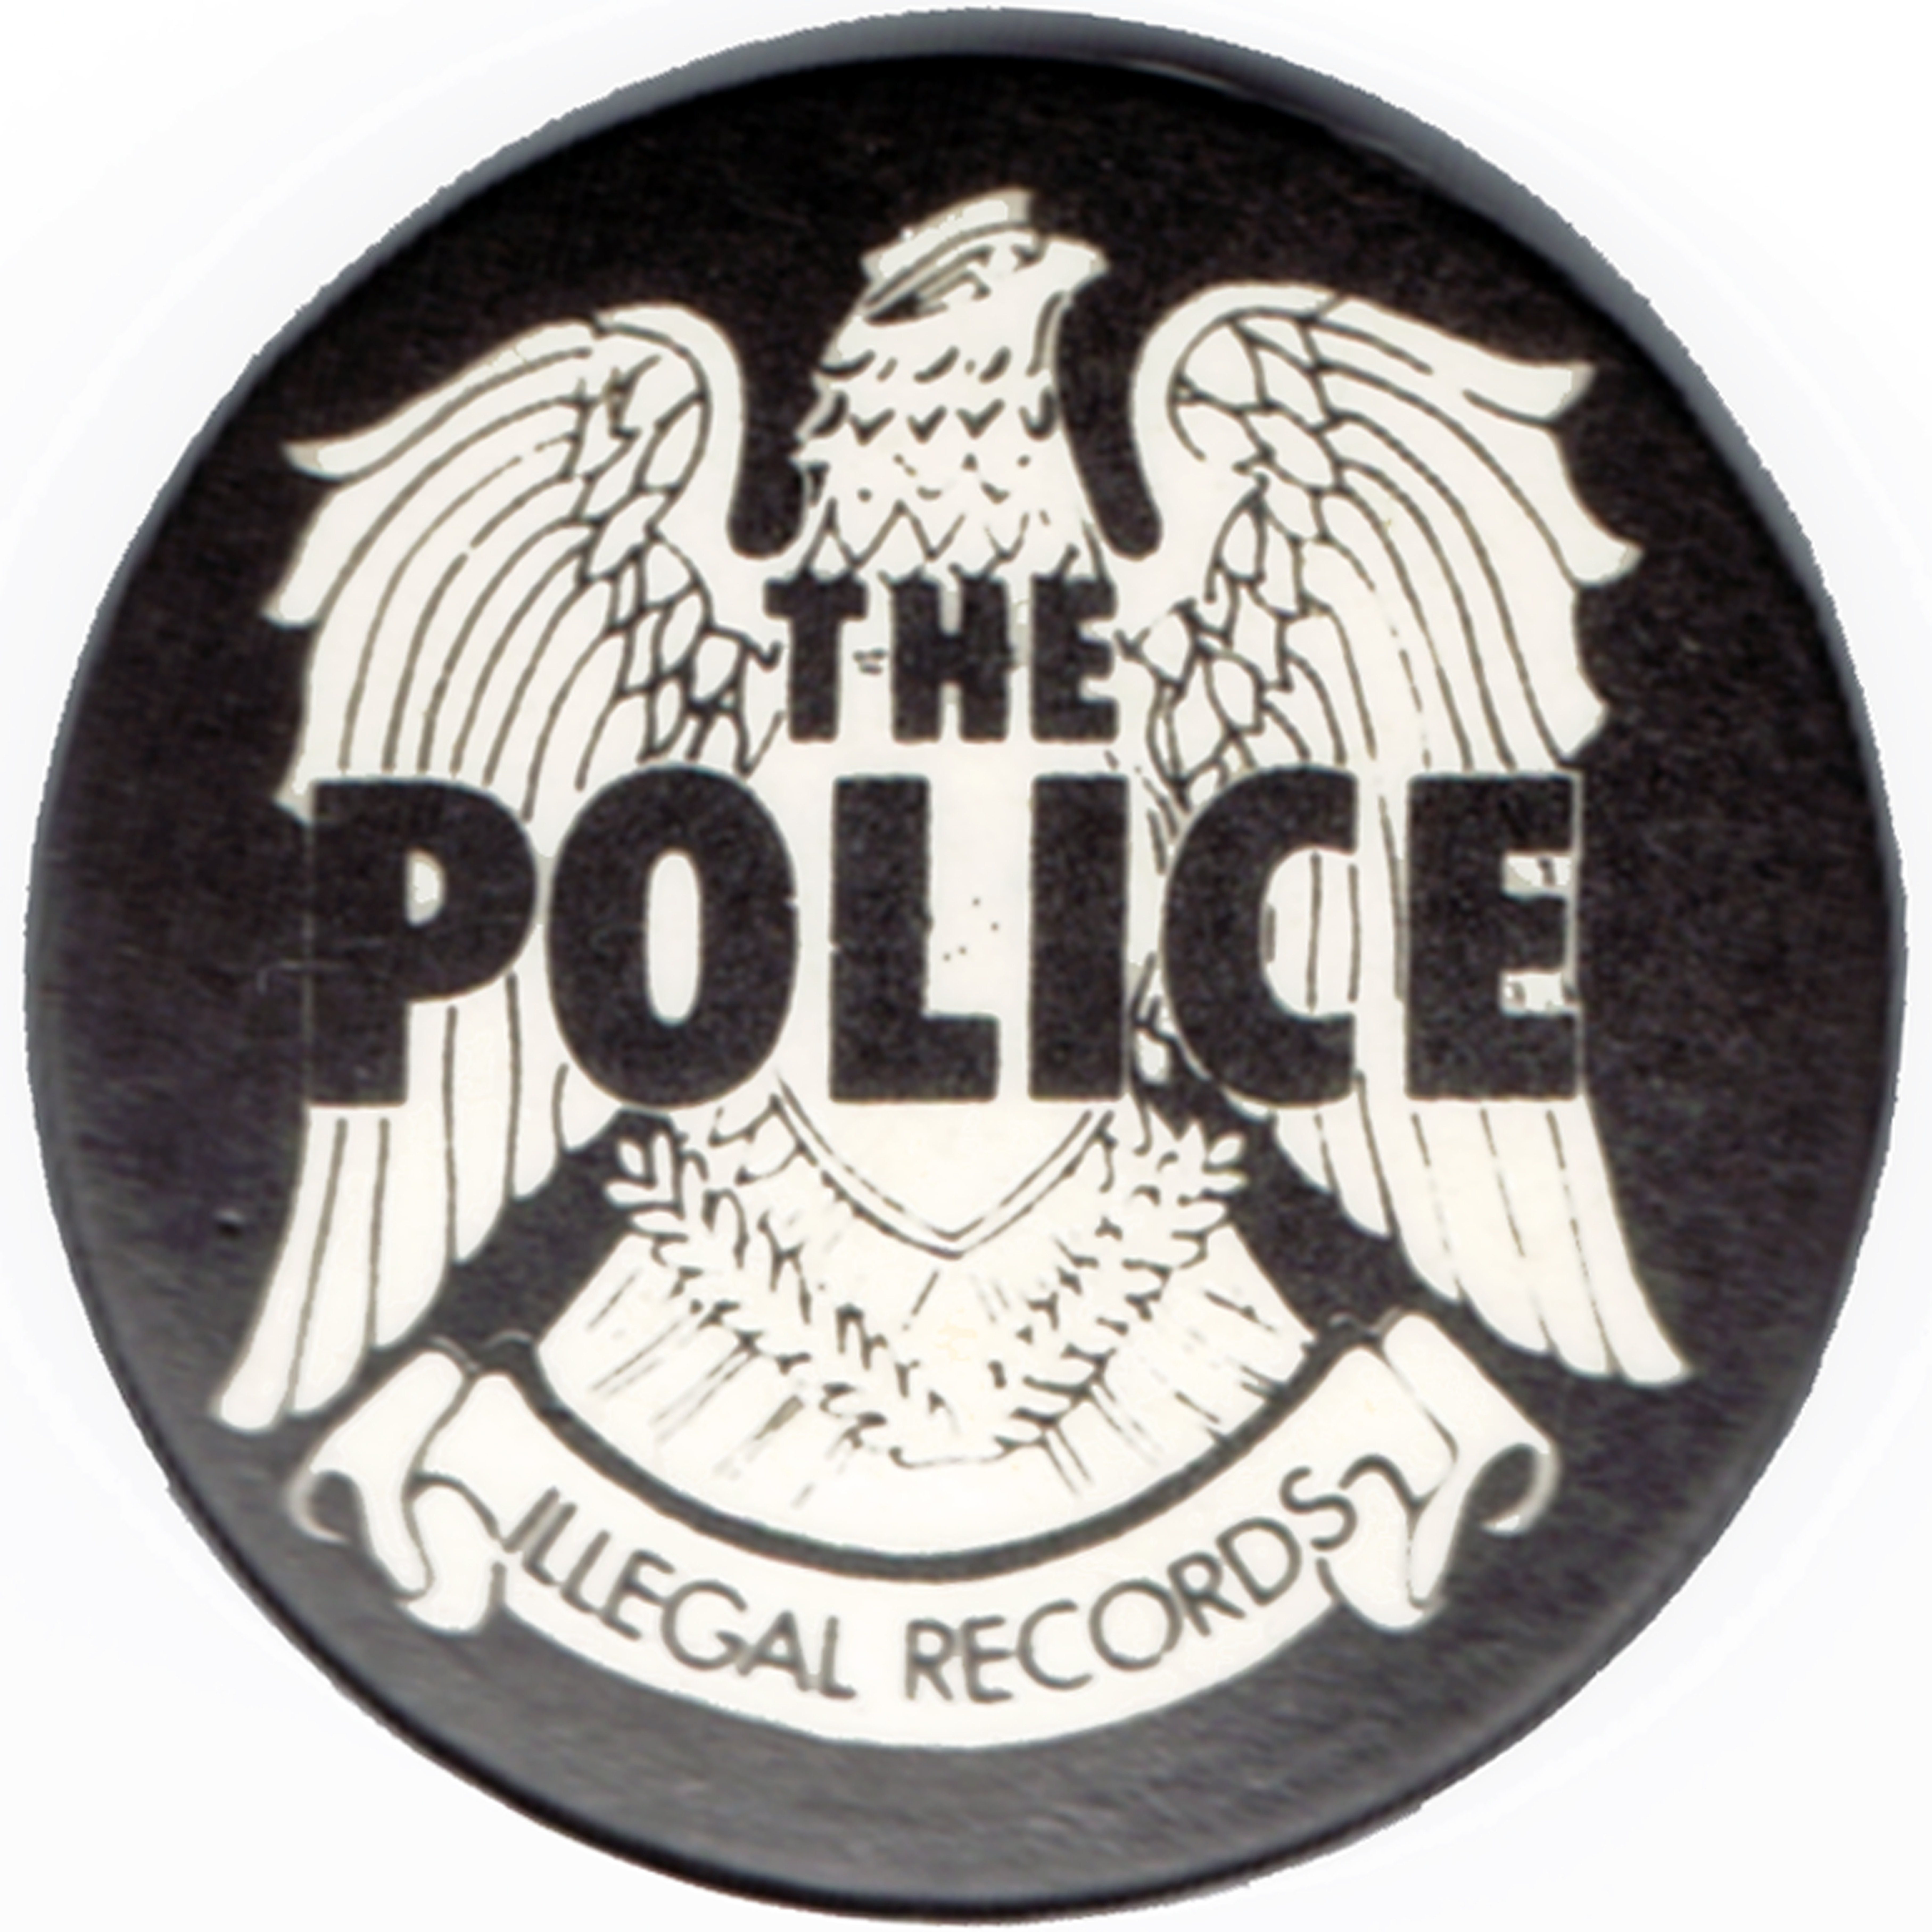 Police1978-12-22CavendishHousePolytechnicManchesterUK.jpg